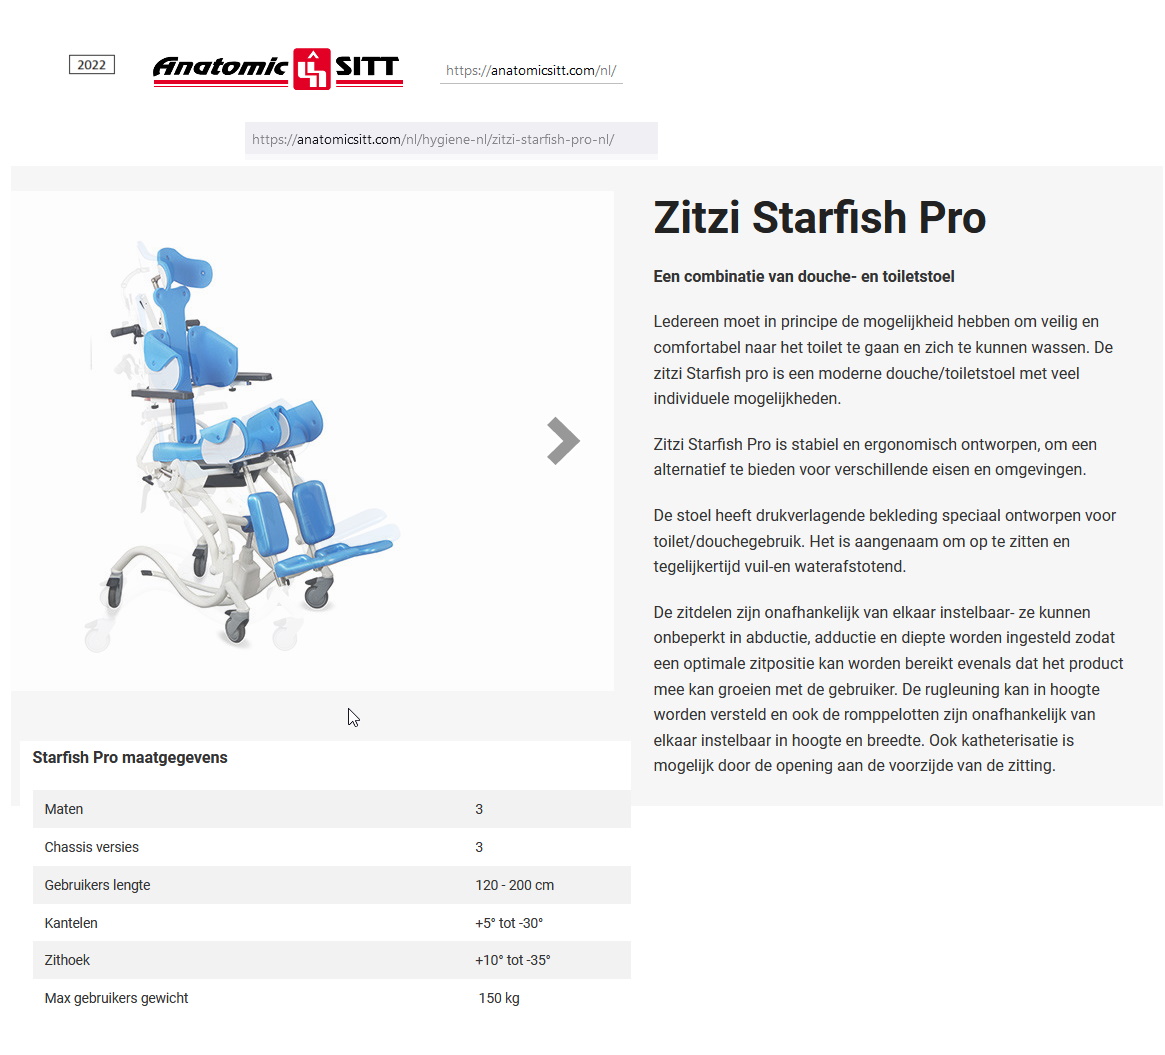 toegevoegd document 2 van Anatomic Sitt Zitzi Starfish Pro  